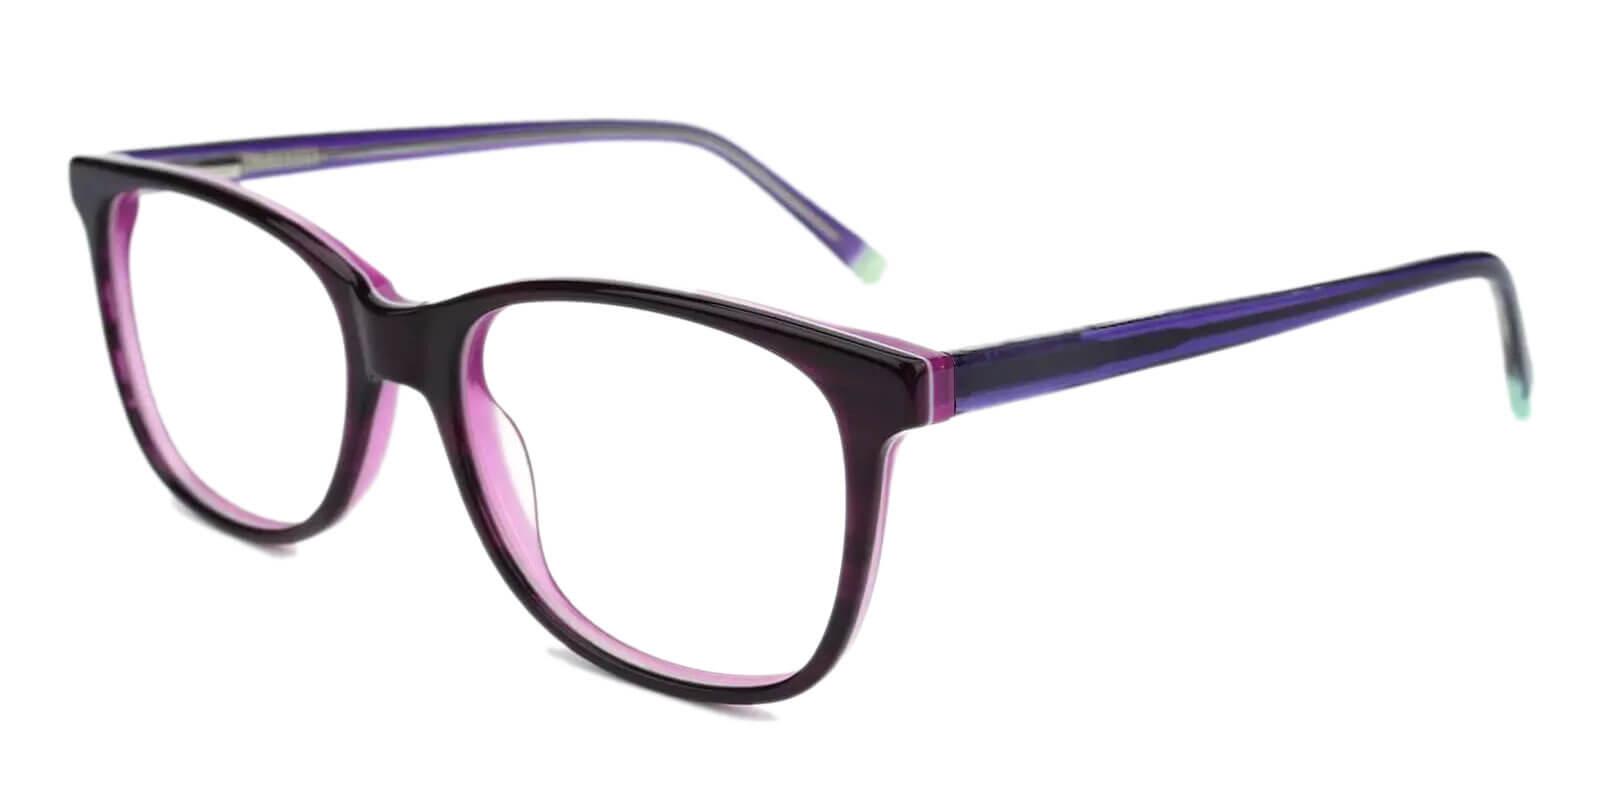 Hibbard Purple Acetate Eyeglasses , SpringHinges , UniversalBridgeFit Frames from ABBE Glasses